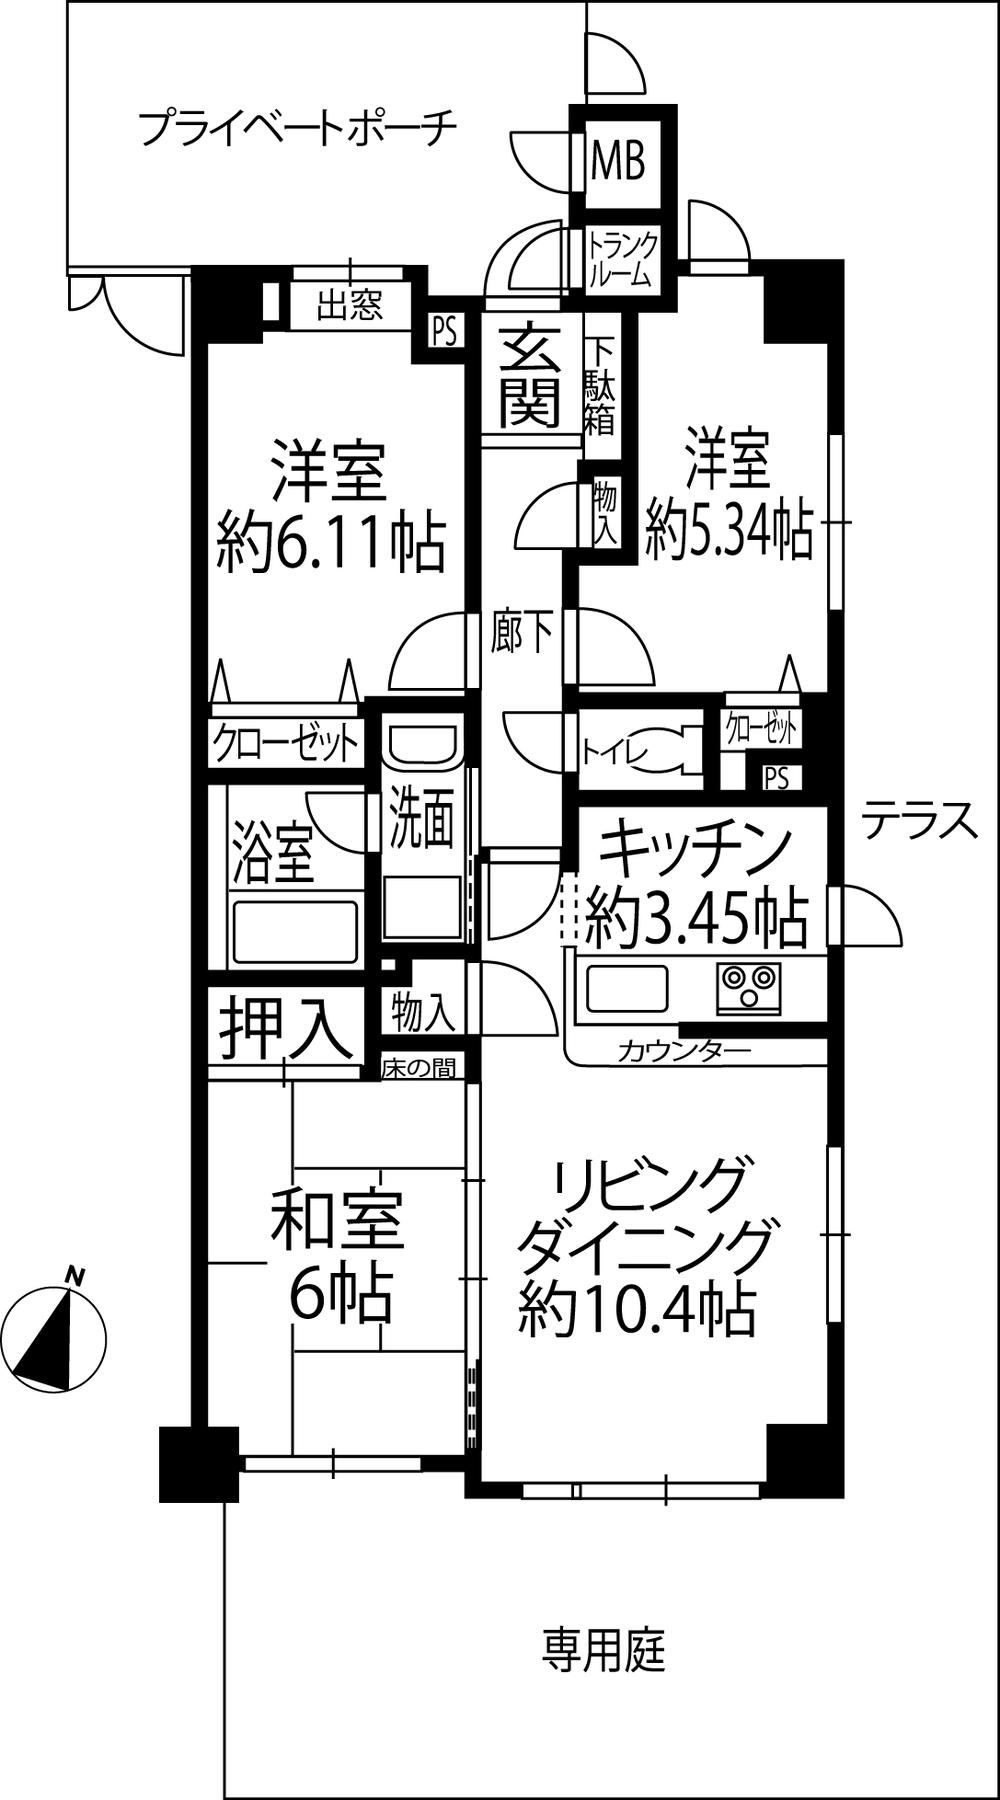 Floor plan. 3LDK, Price 16.8 million yen, Occupied area 69.73 sq m